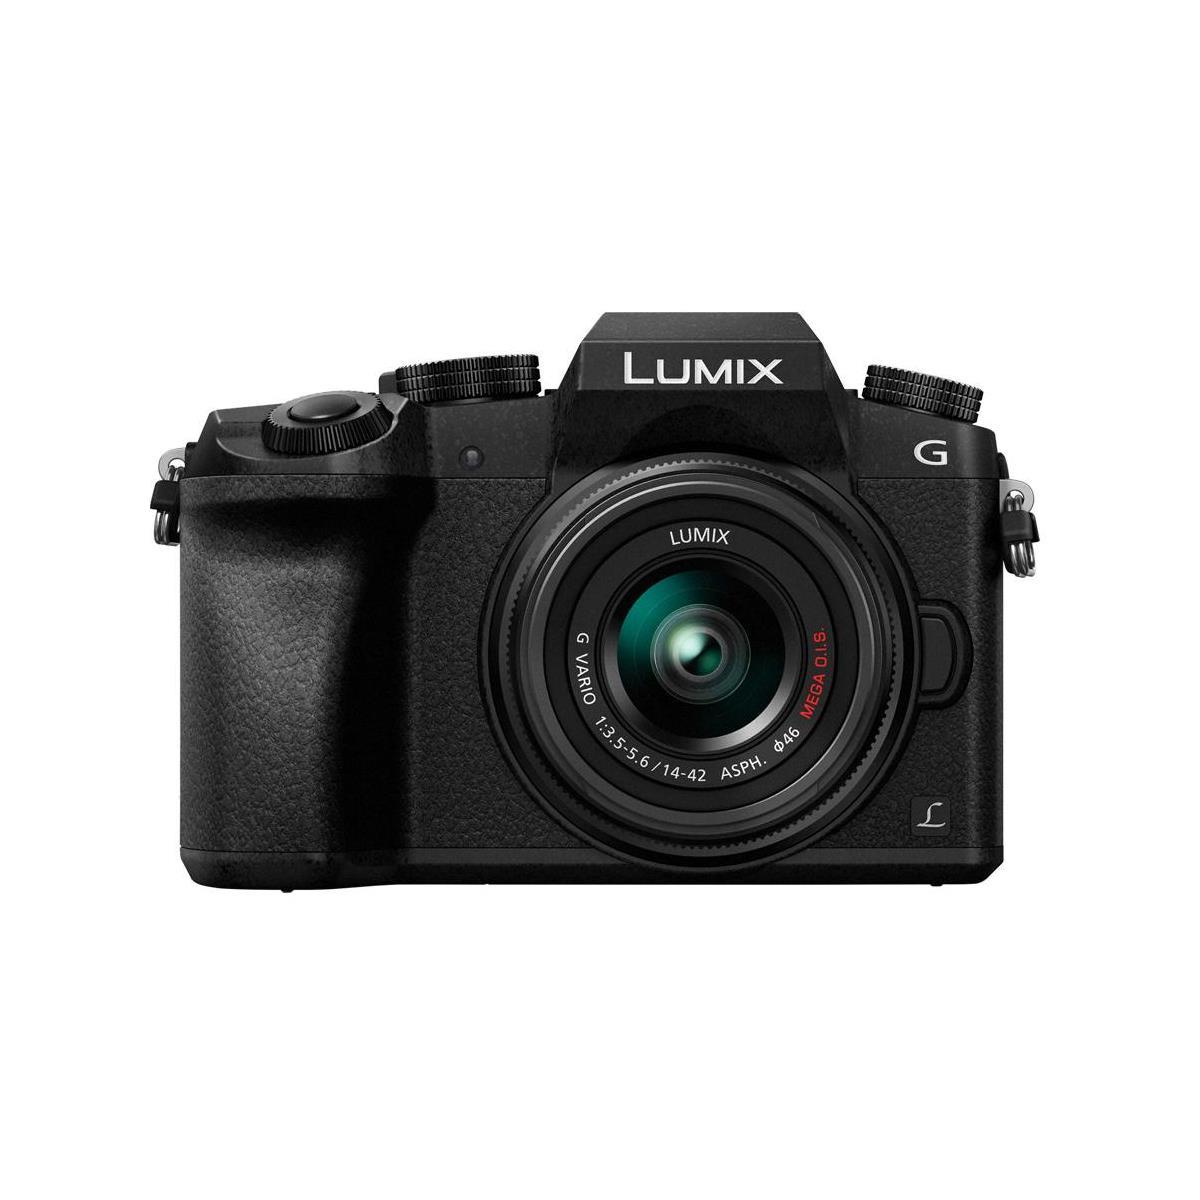 Panasonic Lumix DMC-G7 Mirrorless with 14-42mm Lens, Black